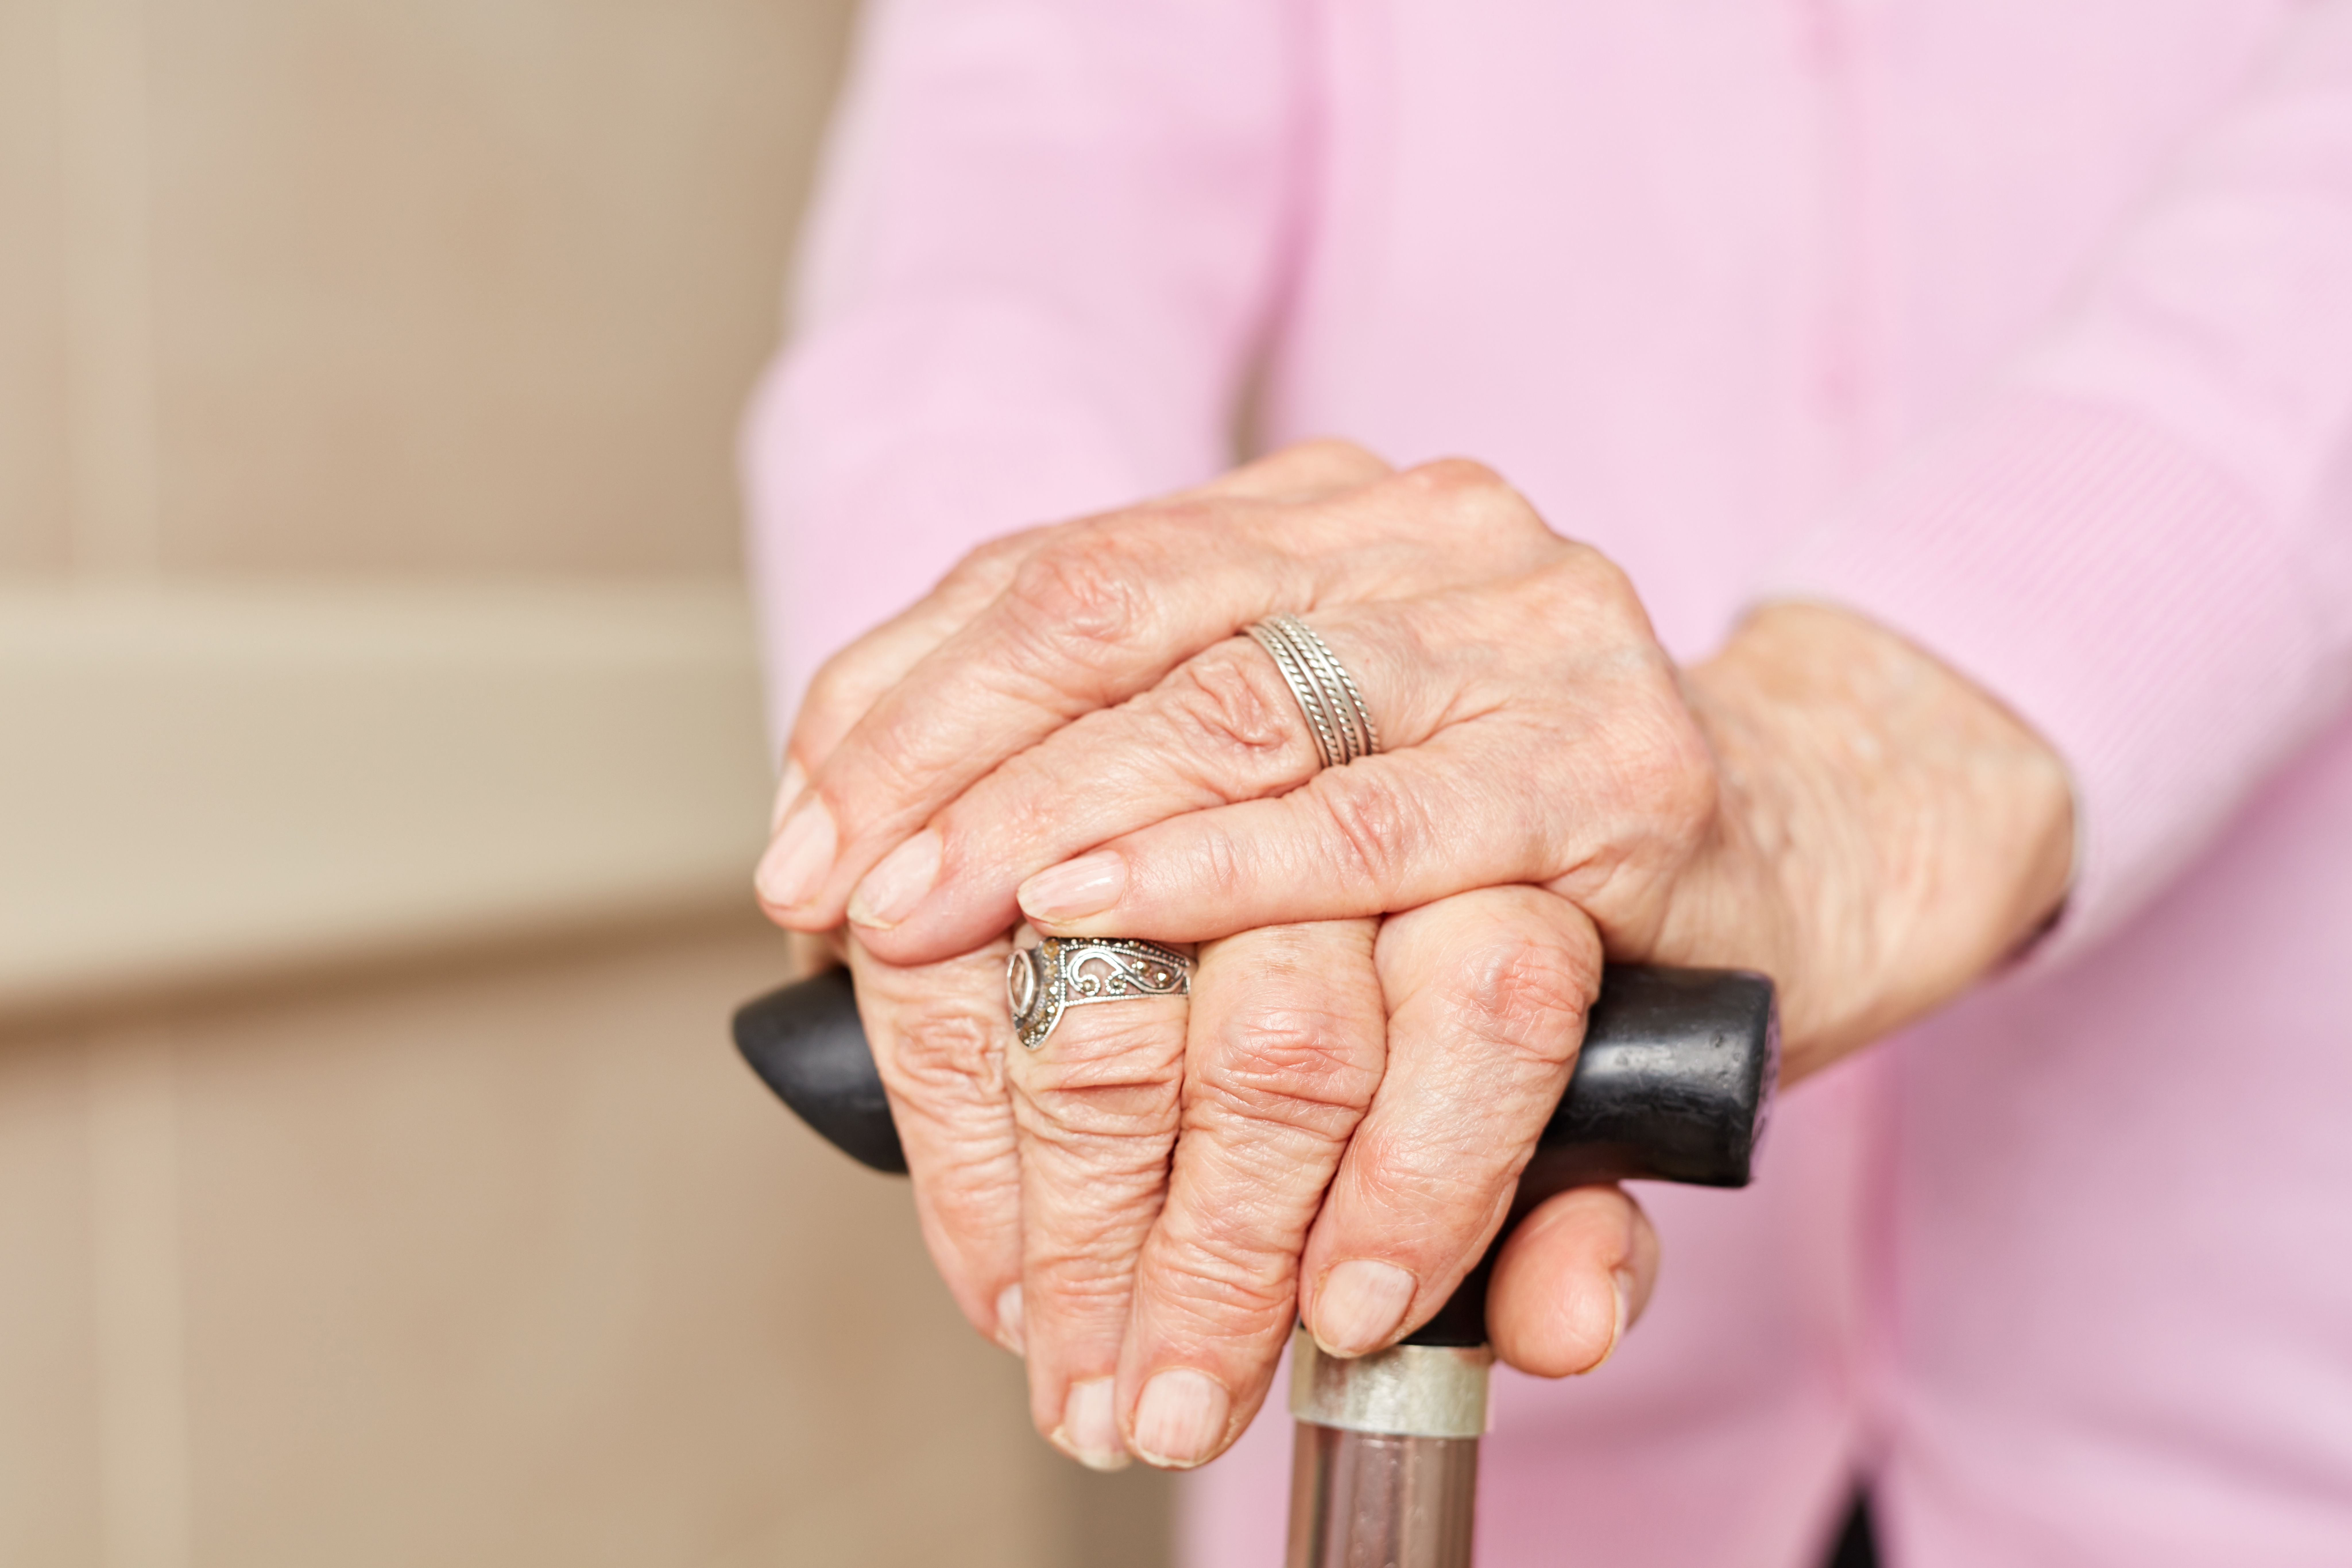 Older woman's hands on cane | Image credit: Robert Kneschke - stock.adobe.com